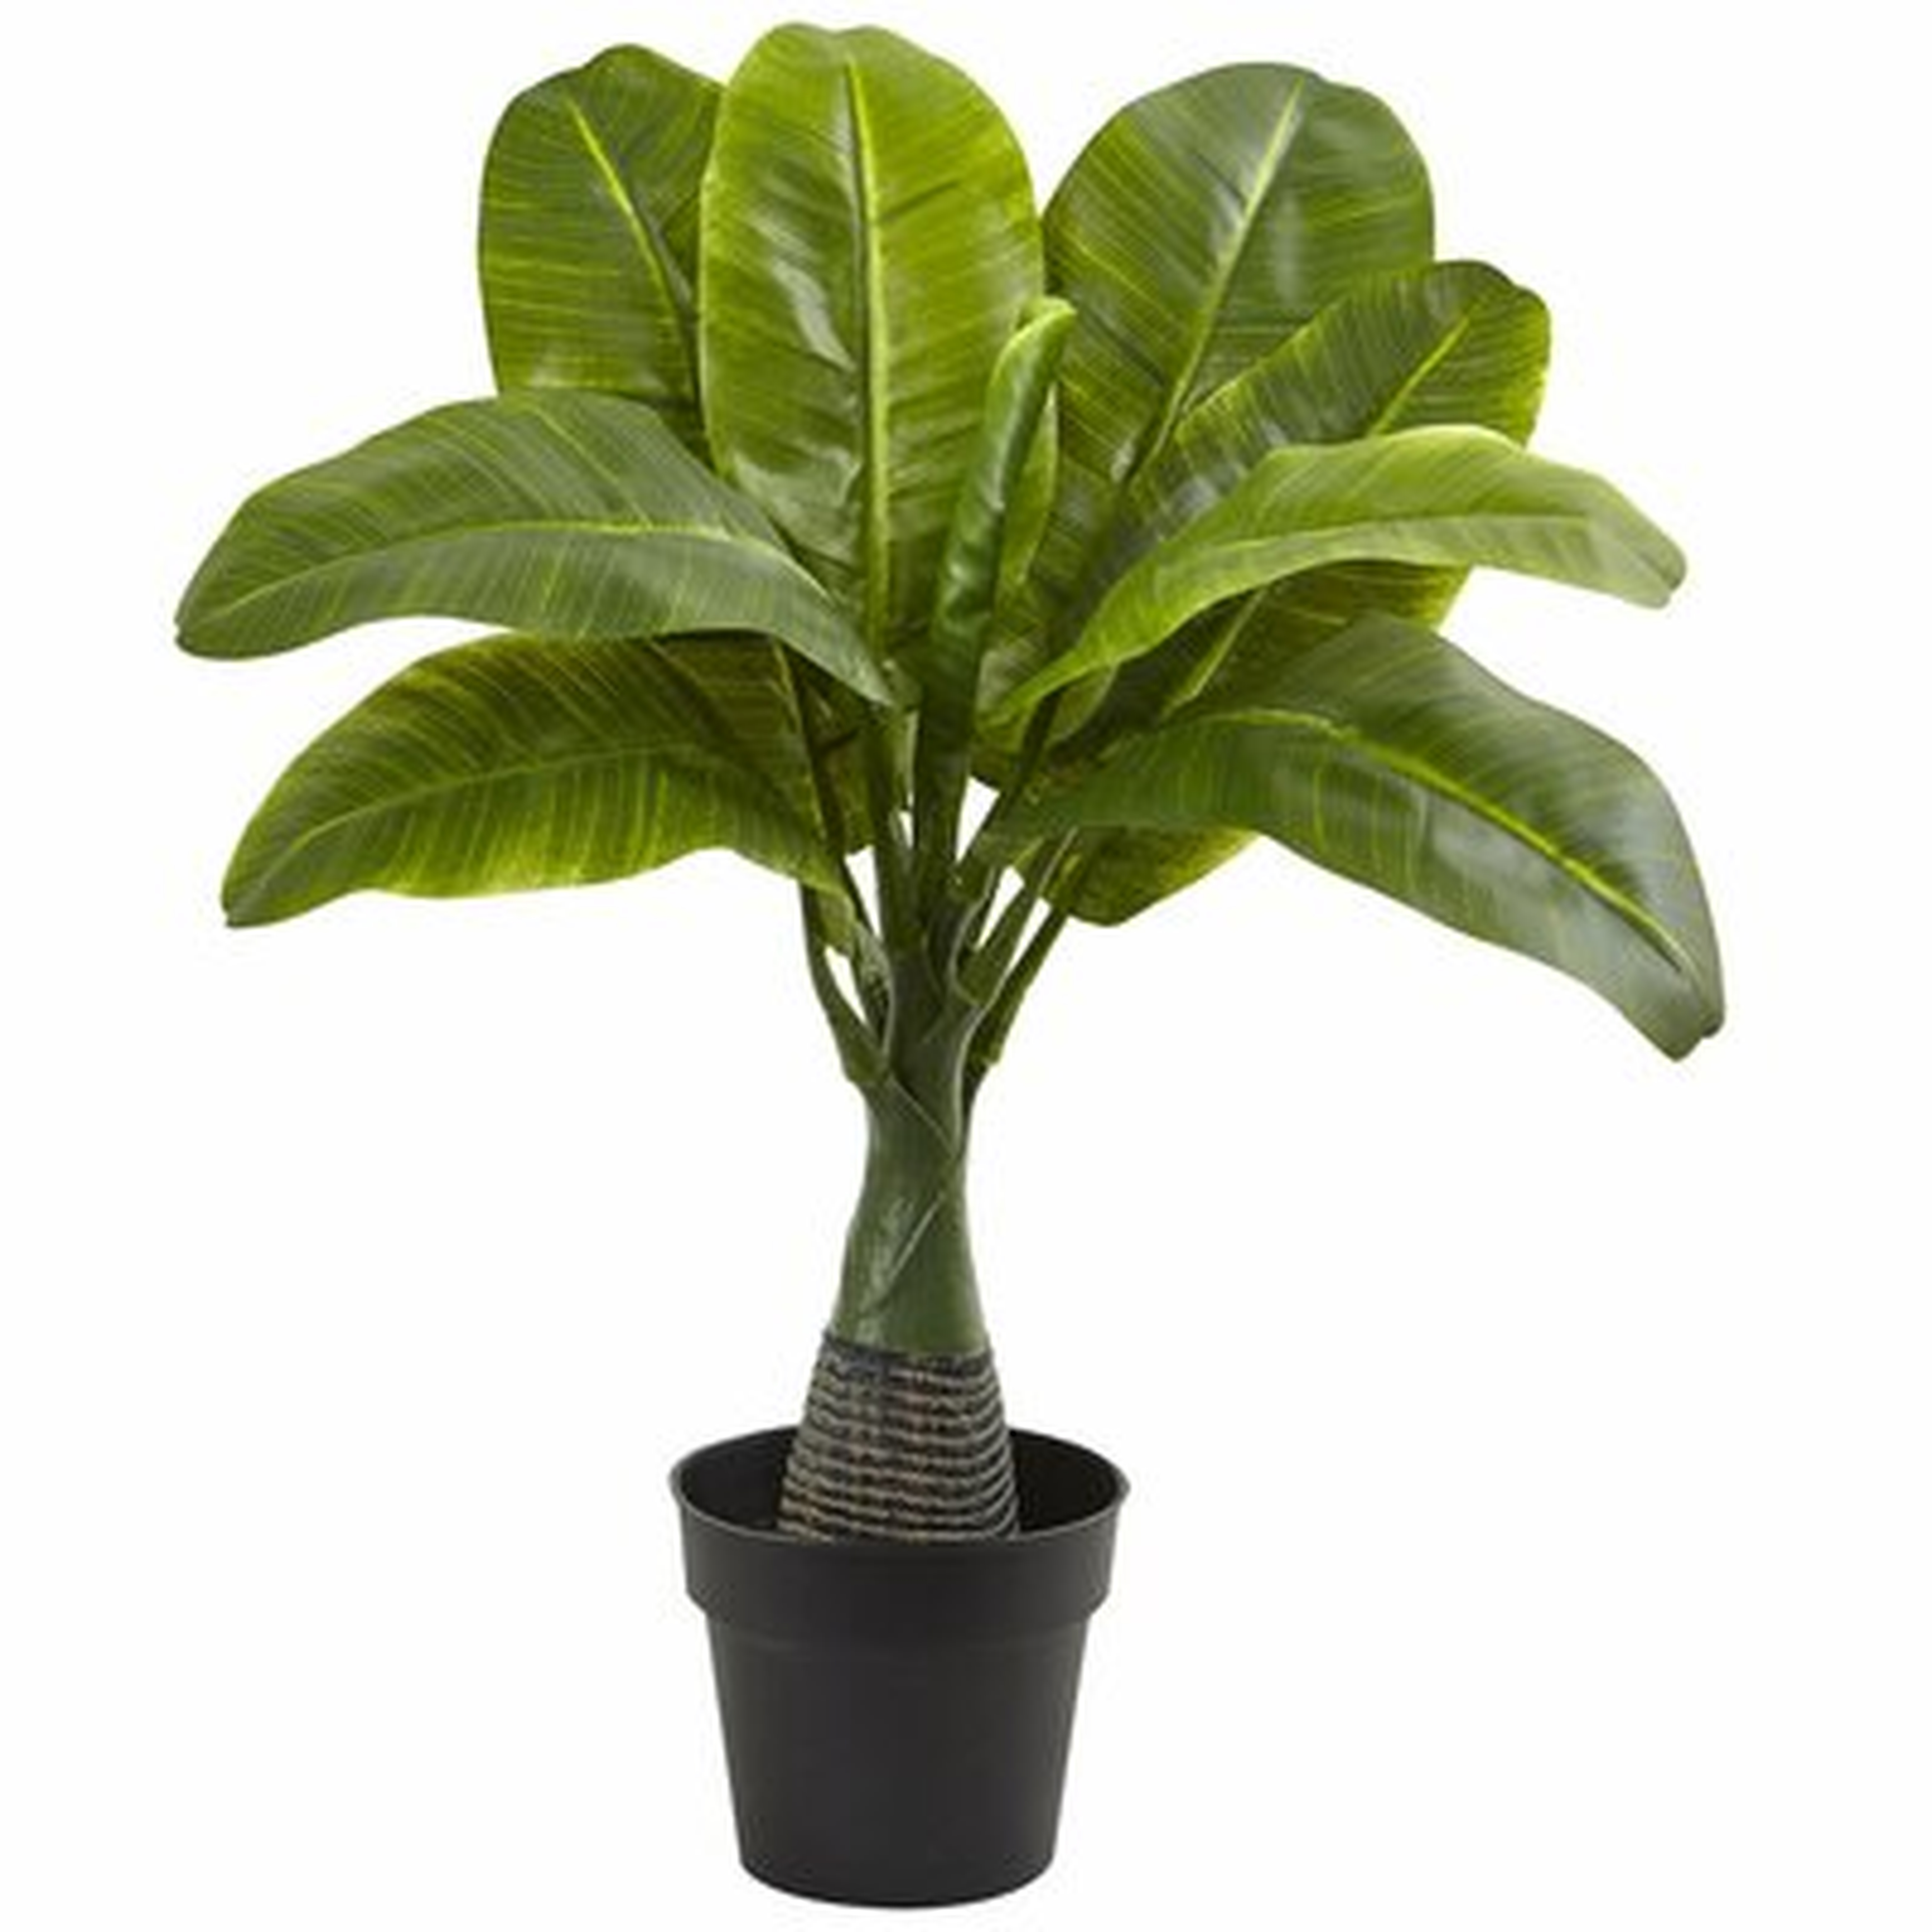 12.75" Artificial Banana Leaf Plant in Pot Liner - Wayfair